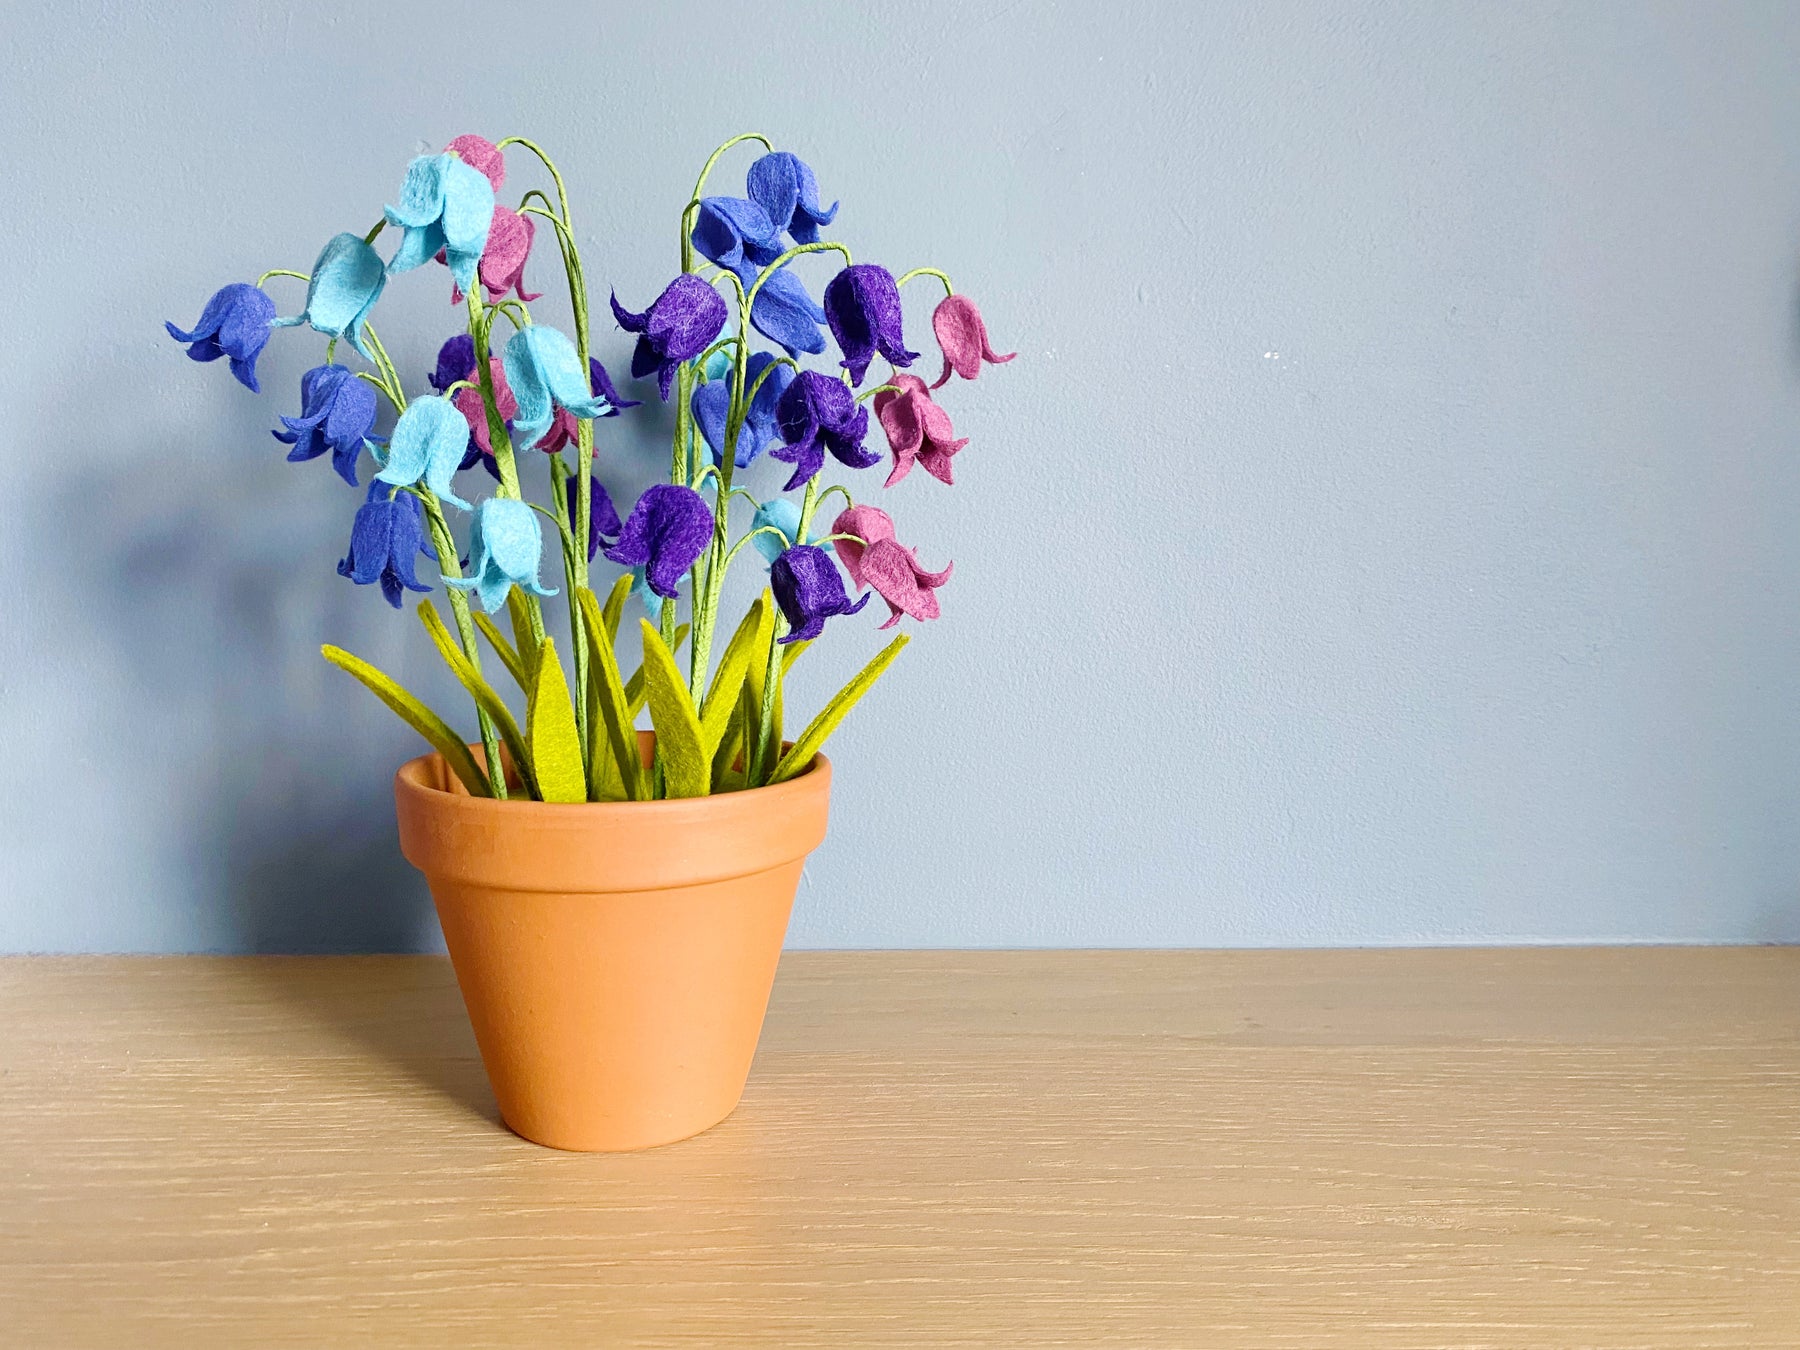 learn how to make felt flowers with The Handmade Florist